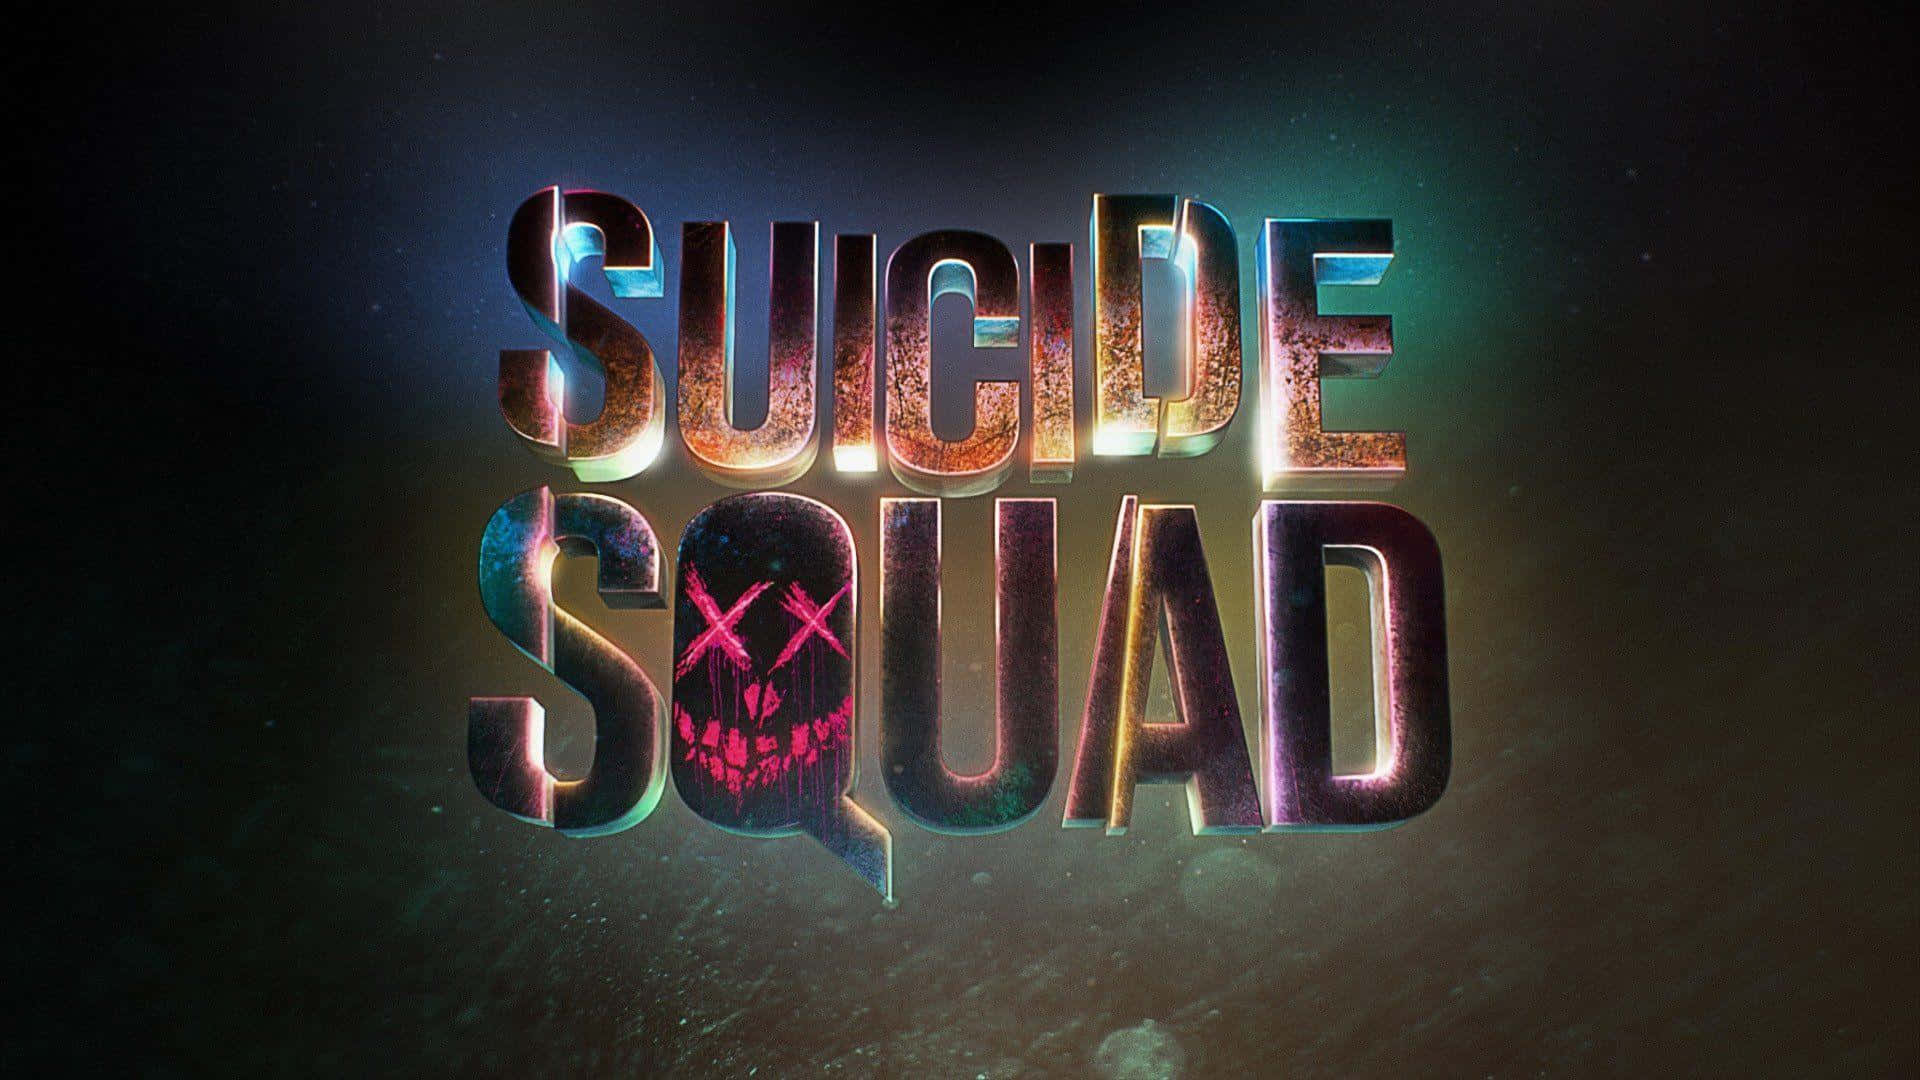 The Suicide Squad Wallpaper